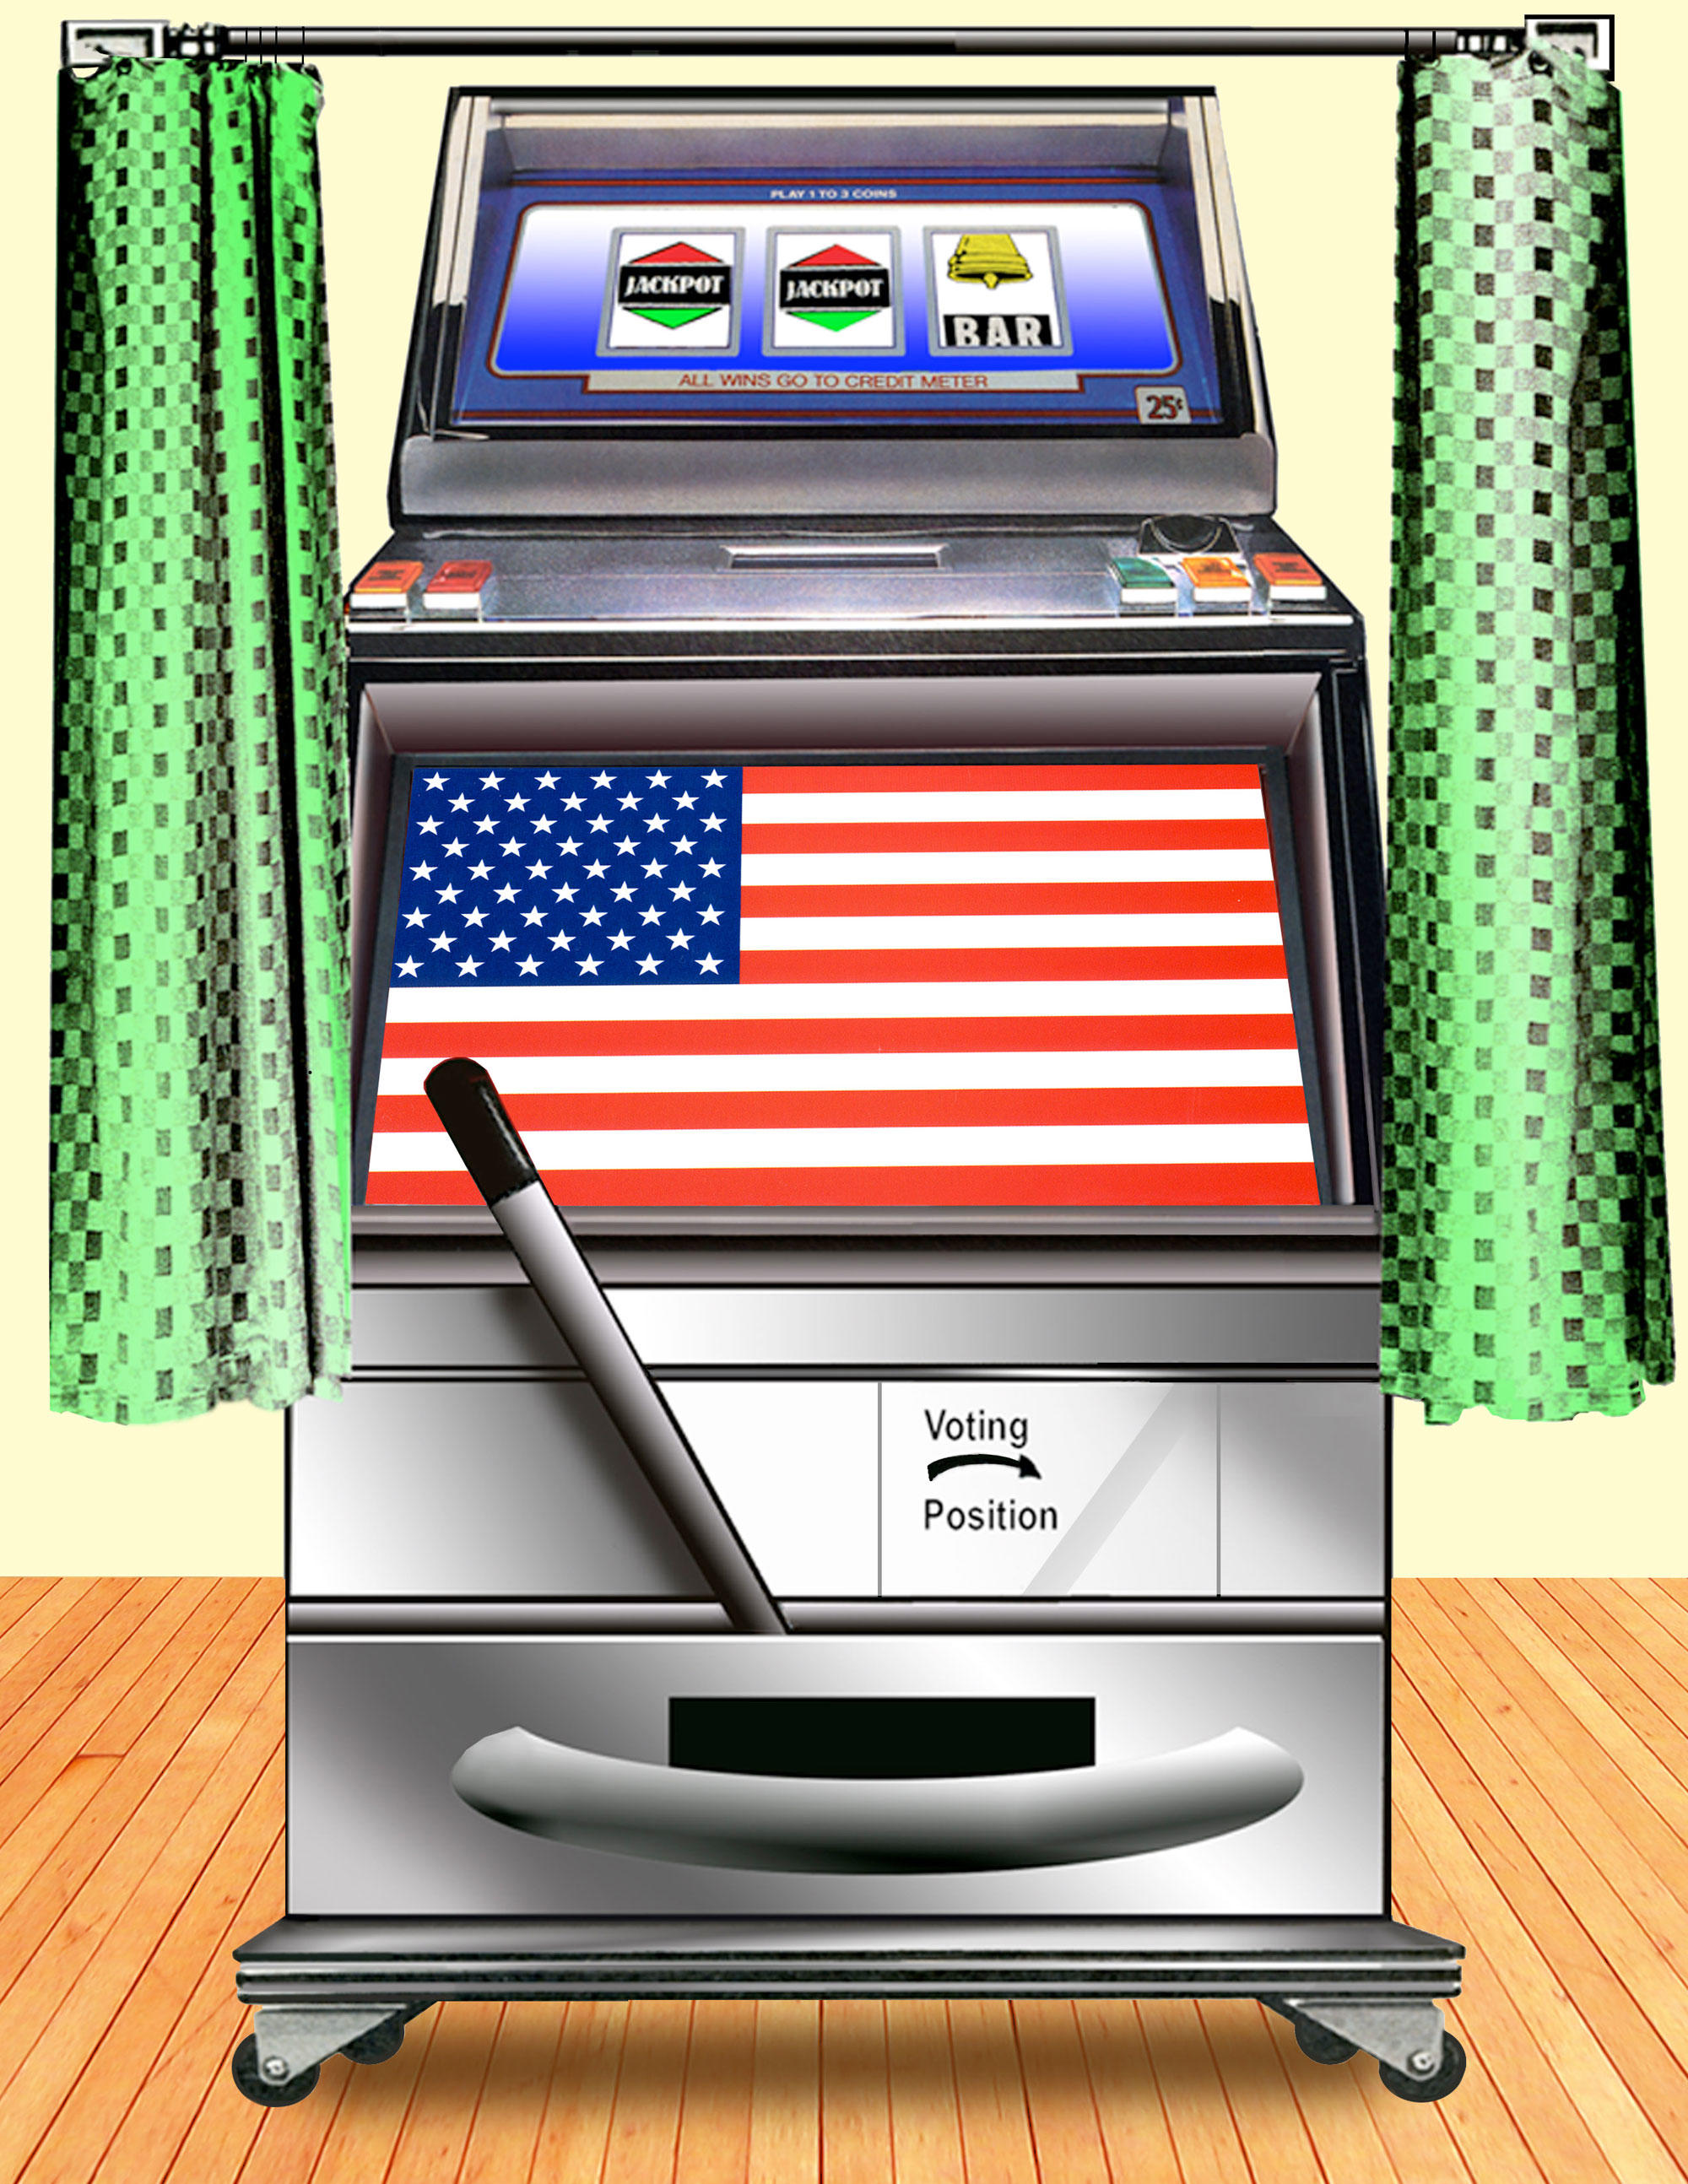 Voting booth illustration